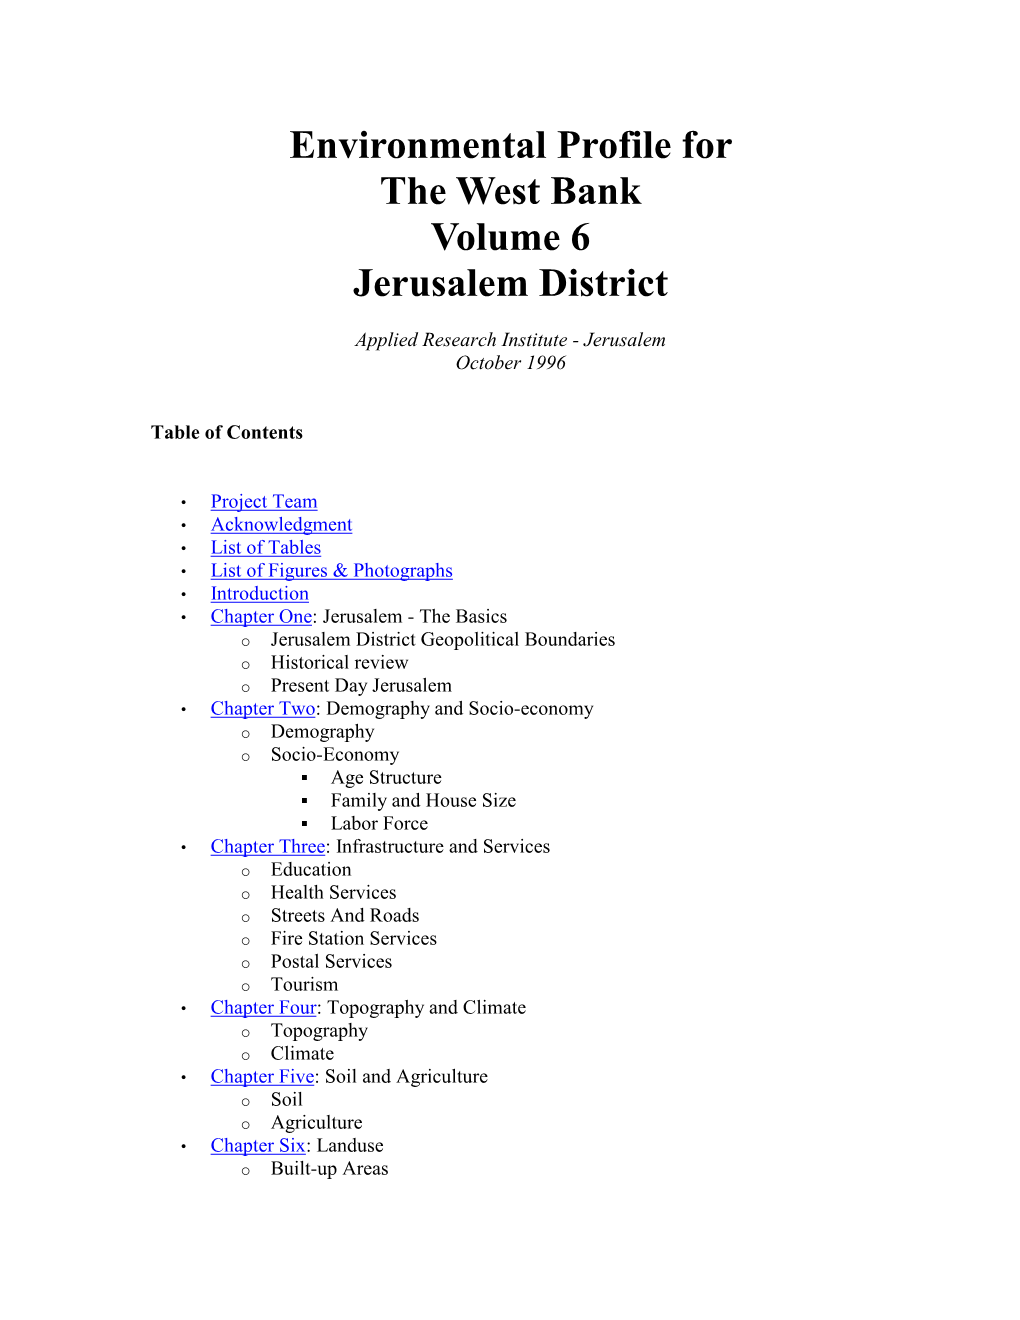 Environmental Profile for the West Bank Volume 6 Jerusalem District